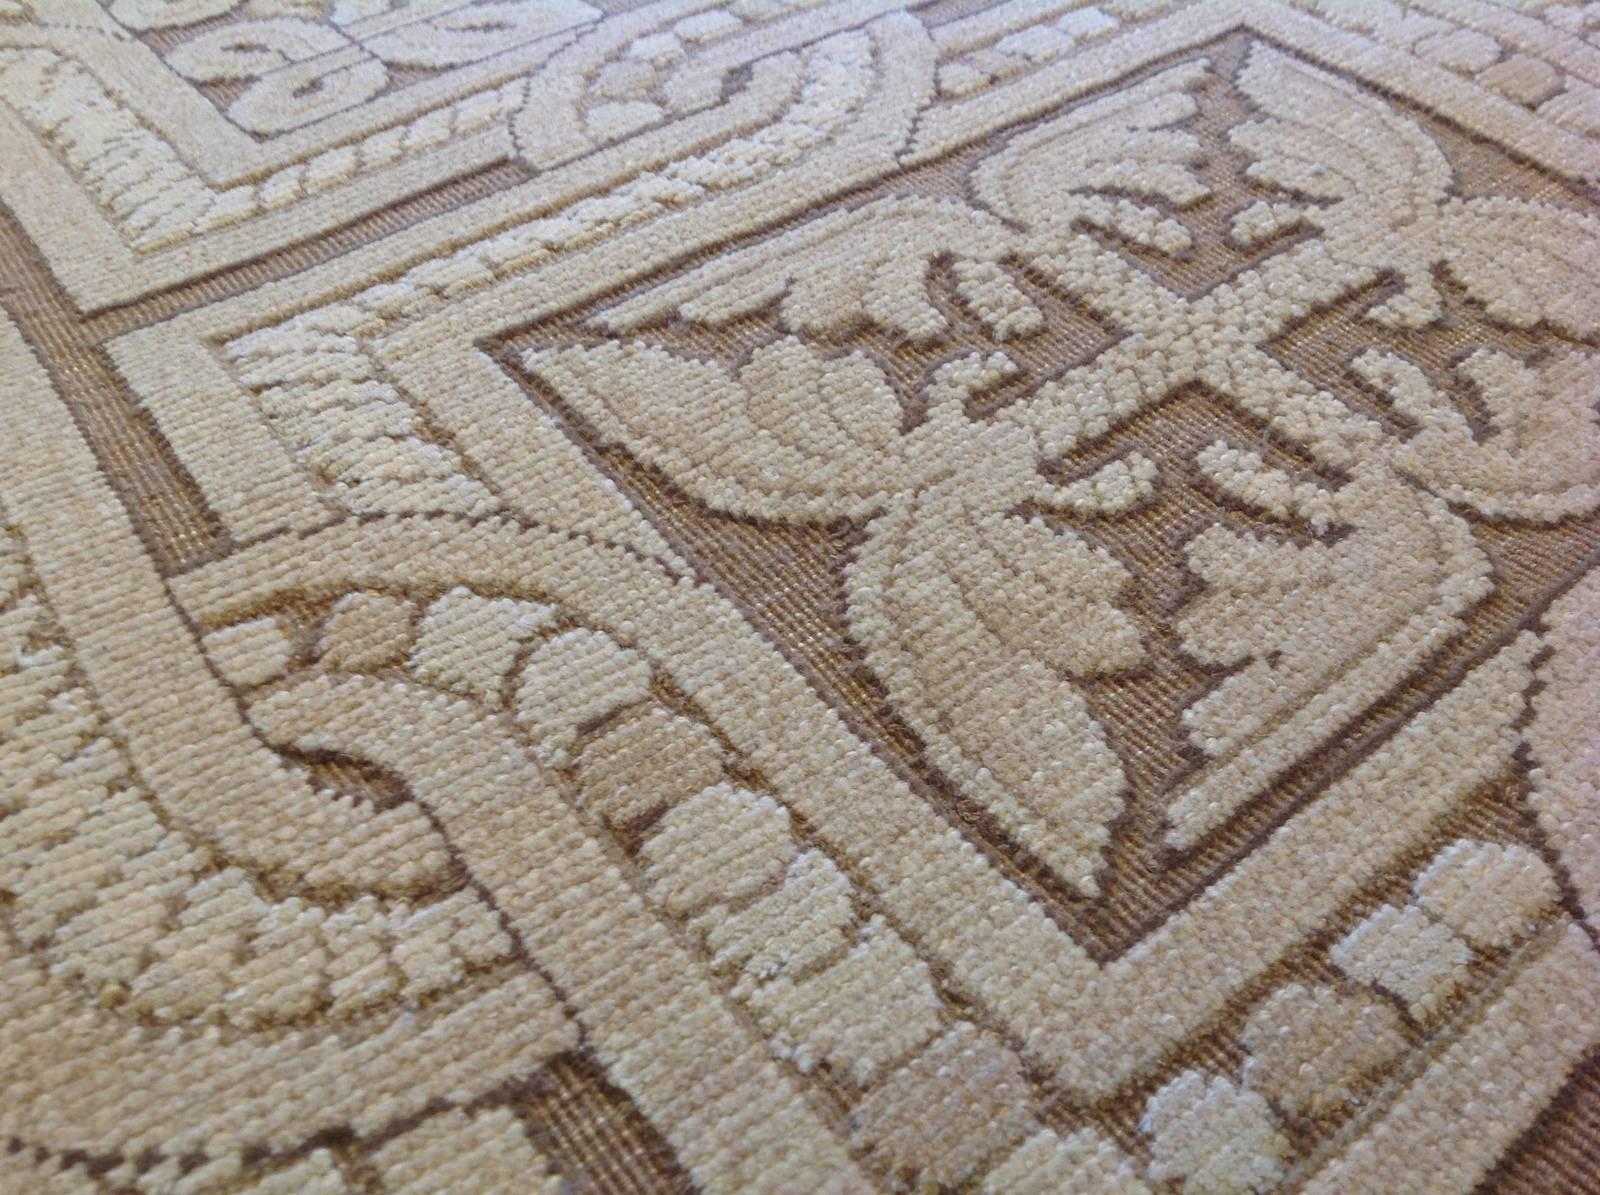 Geometric floral European rug
Colors: tan, cream and brown.